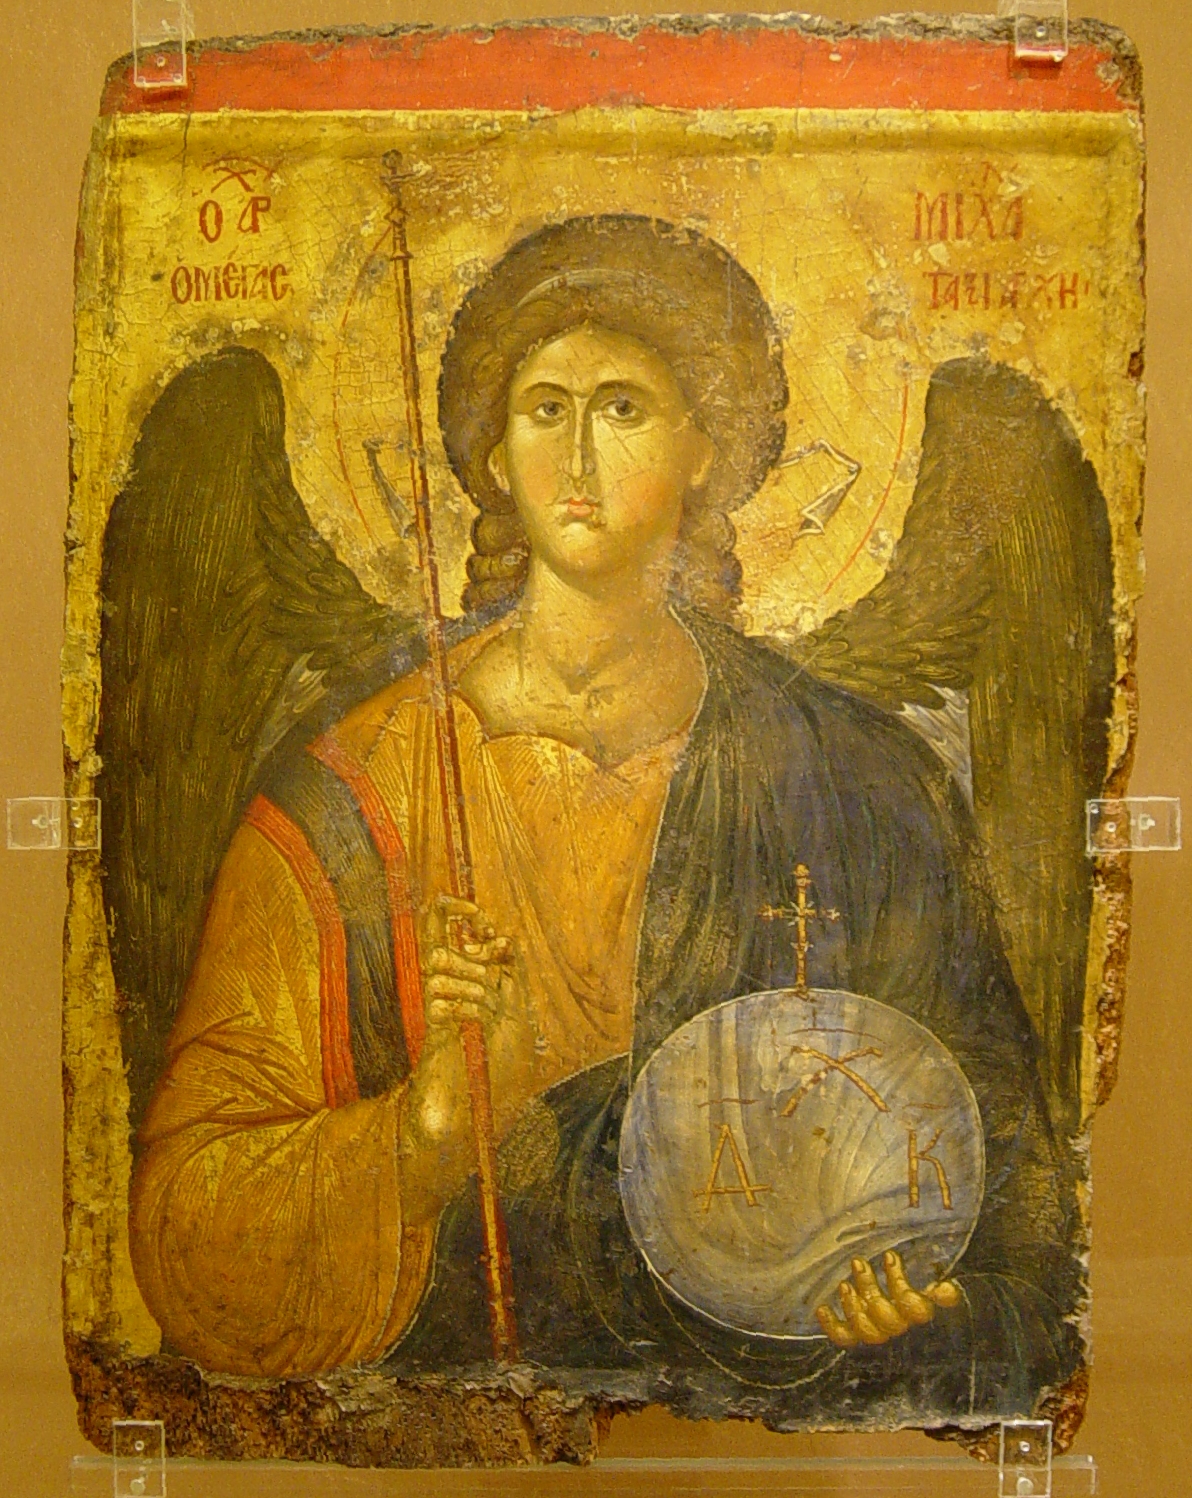 Icons of Female Saints – Seraphic Restorations